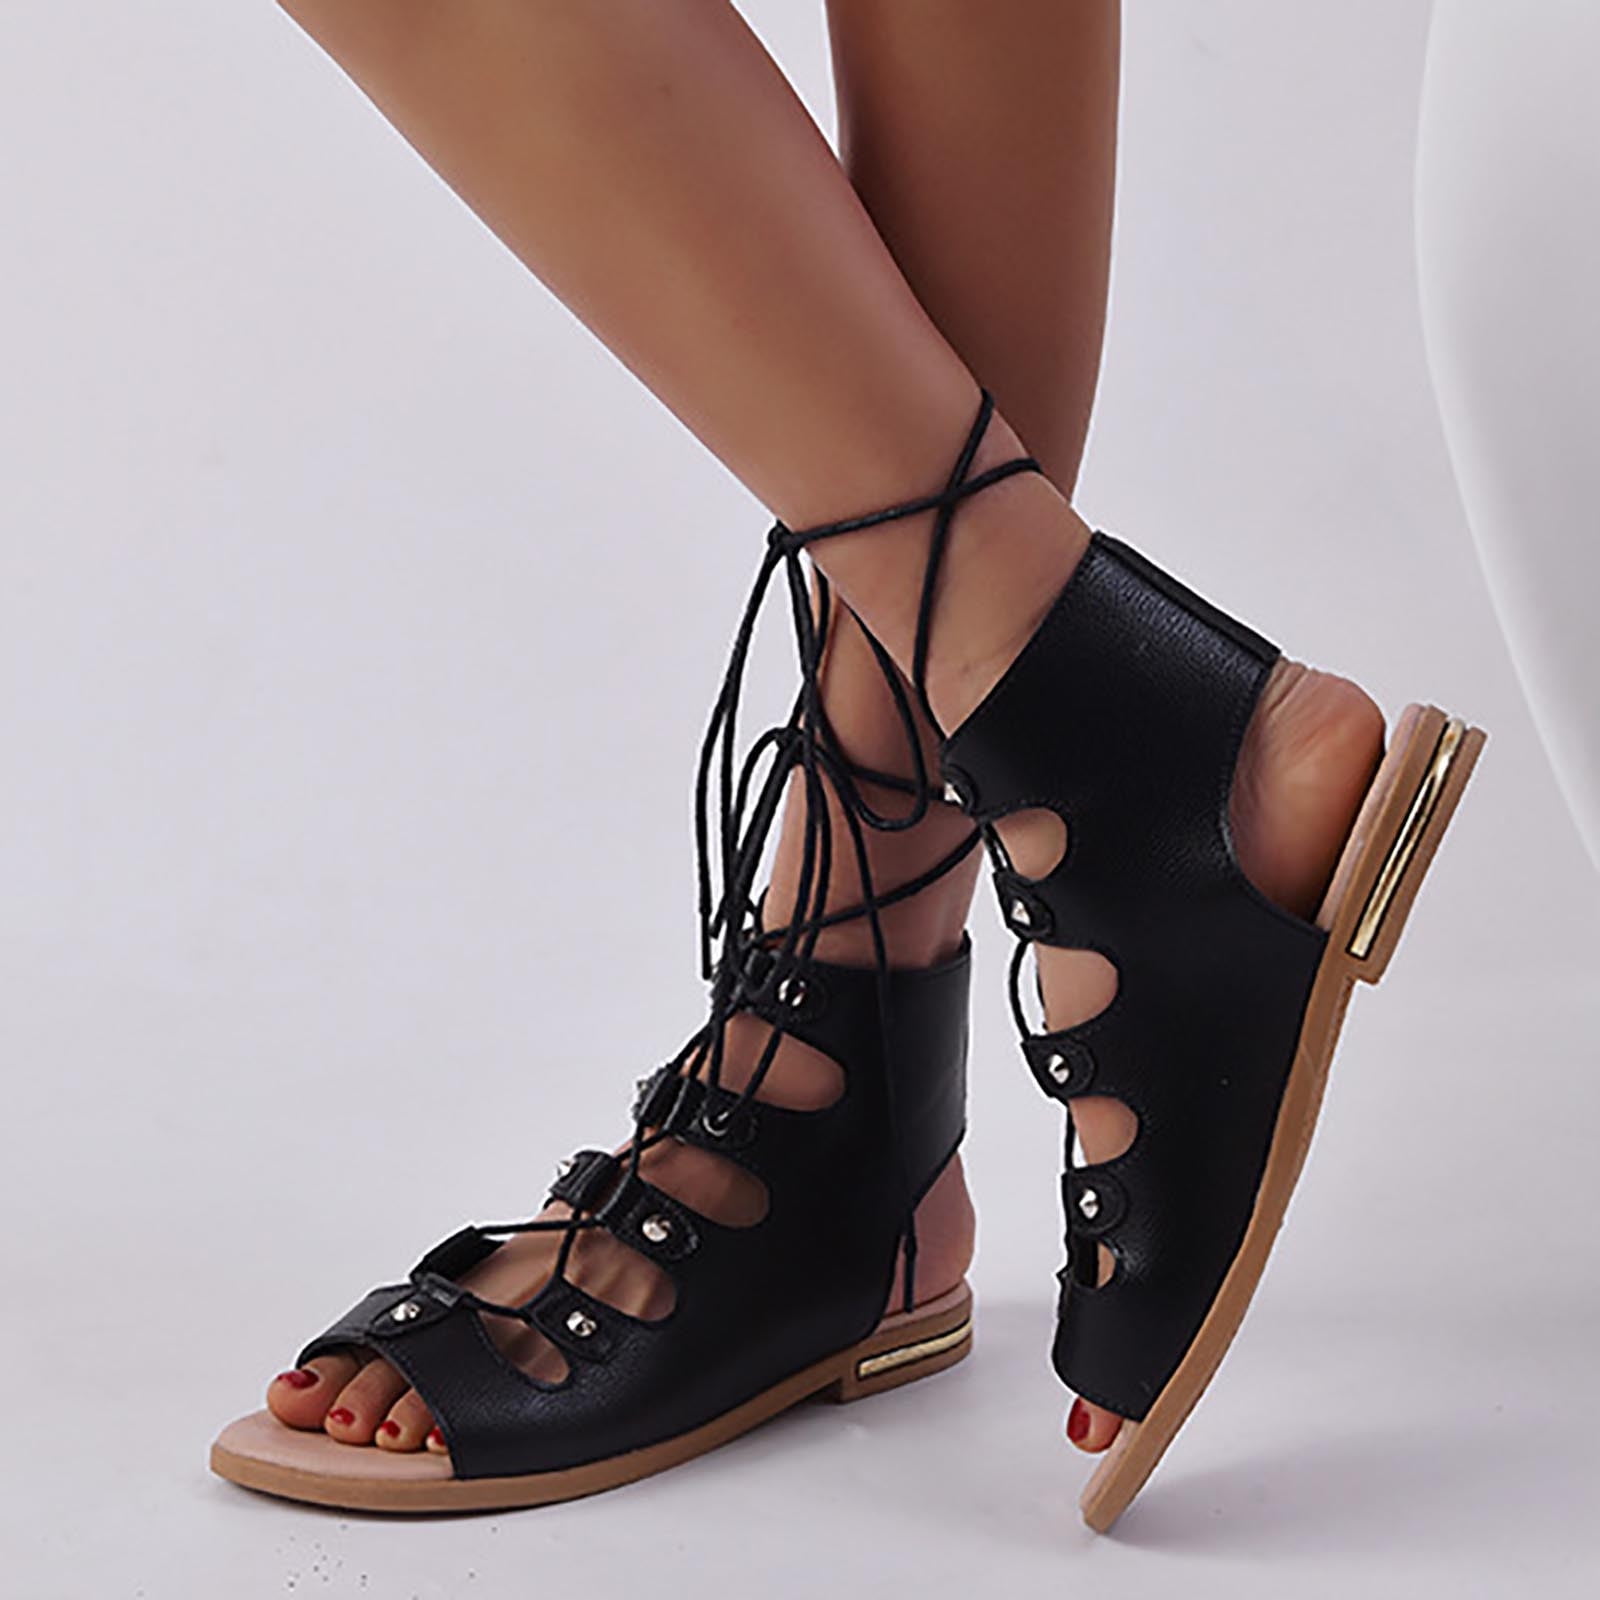 Women's Comfort Slipper Sandals Cross Strap Slip On Casual Summer Flats Shoes